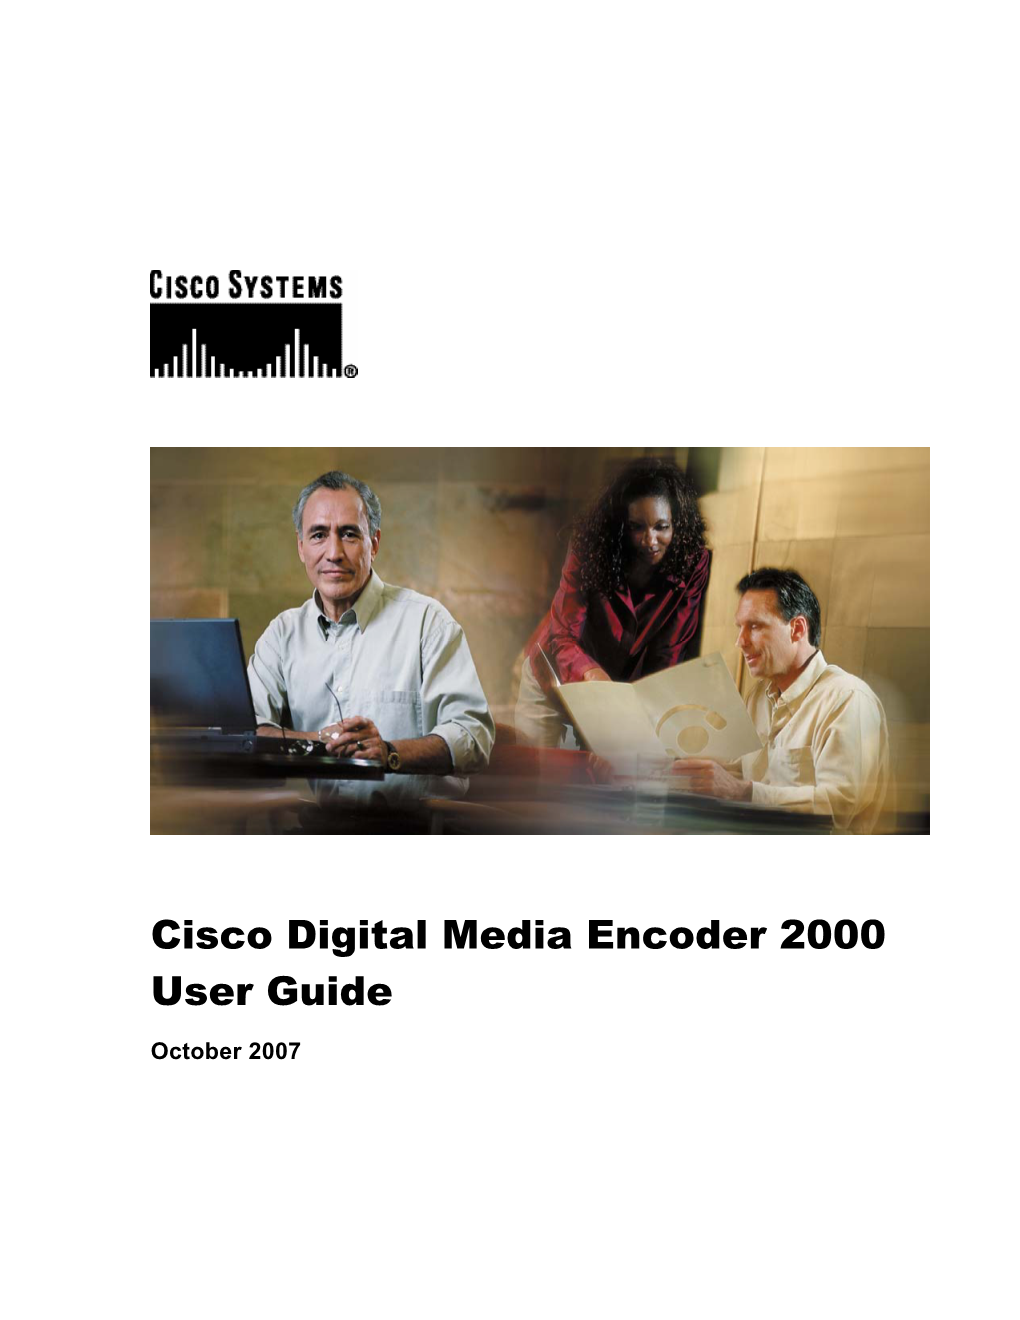 Cisco Digital Media Encoder 2000 User Guide